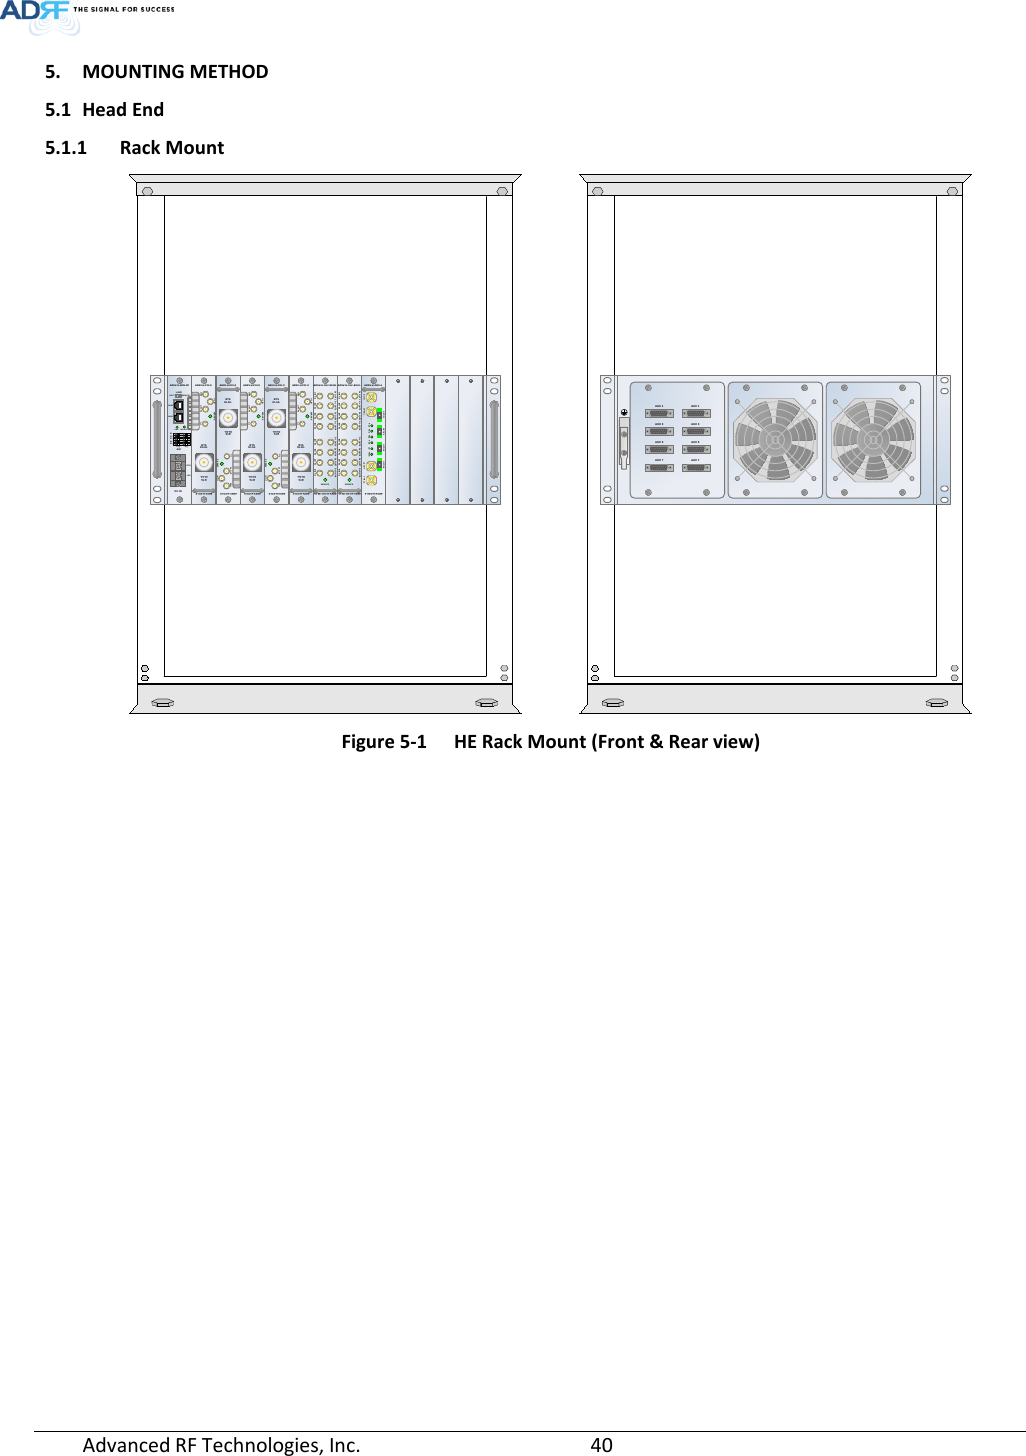 Page 40 of ADRF KOREA ADXV-R-336 DAS (Distributed Antenna System) User Manual ADXV DAS